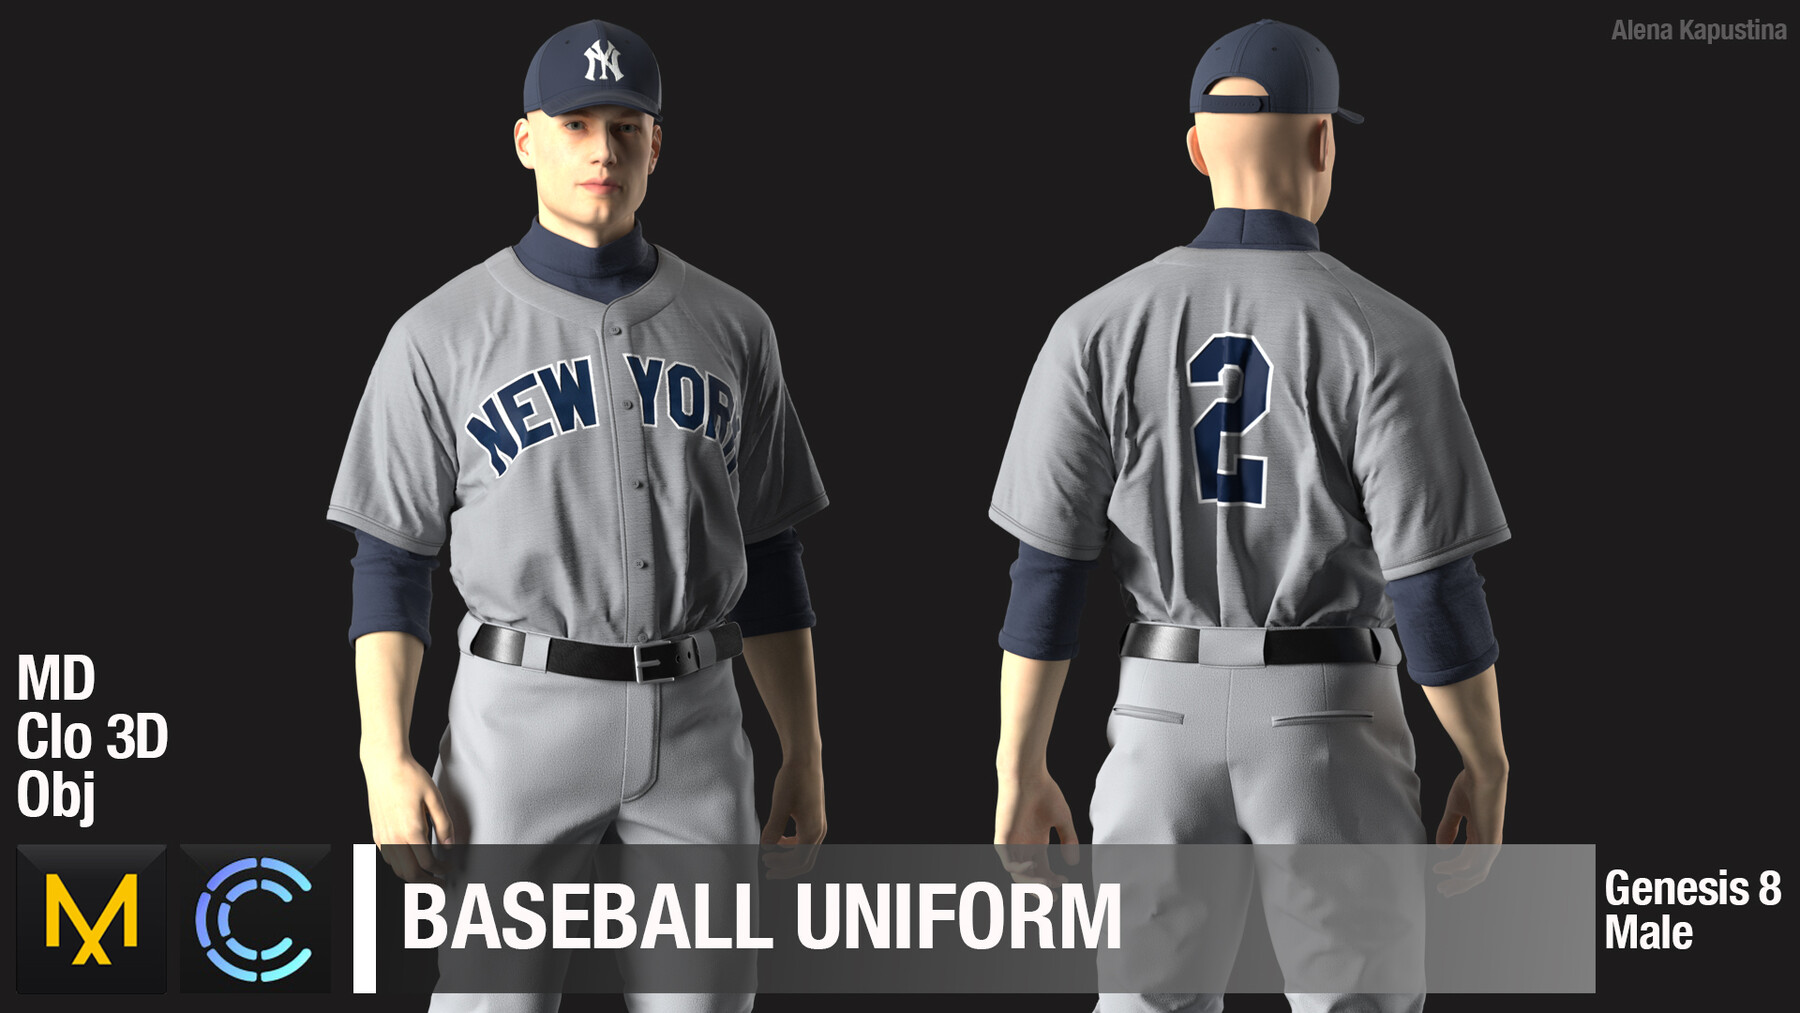 Baseball-uniforms - Hobbyist, Digital Artist